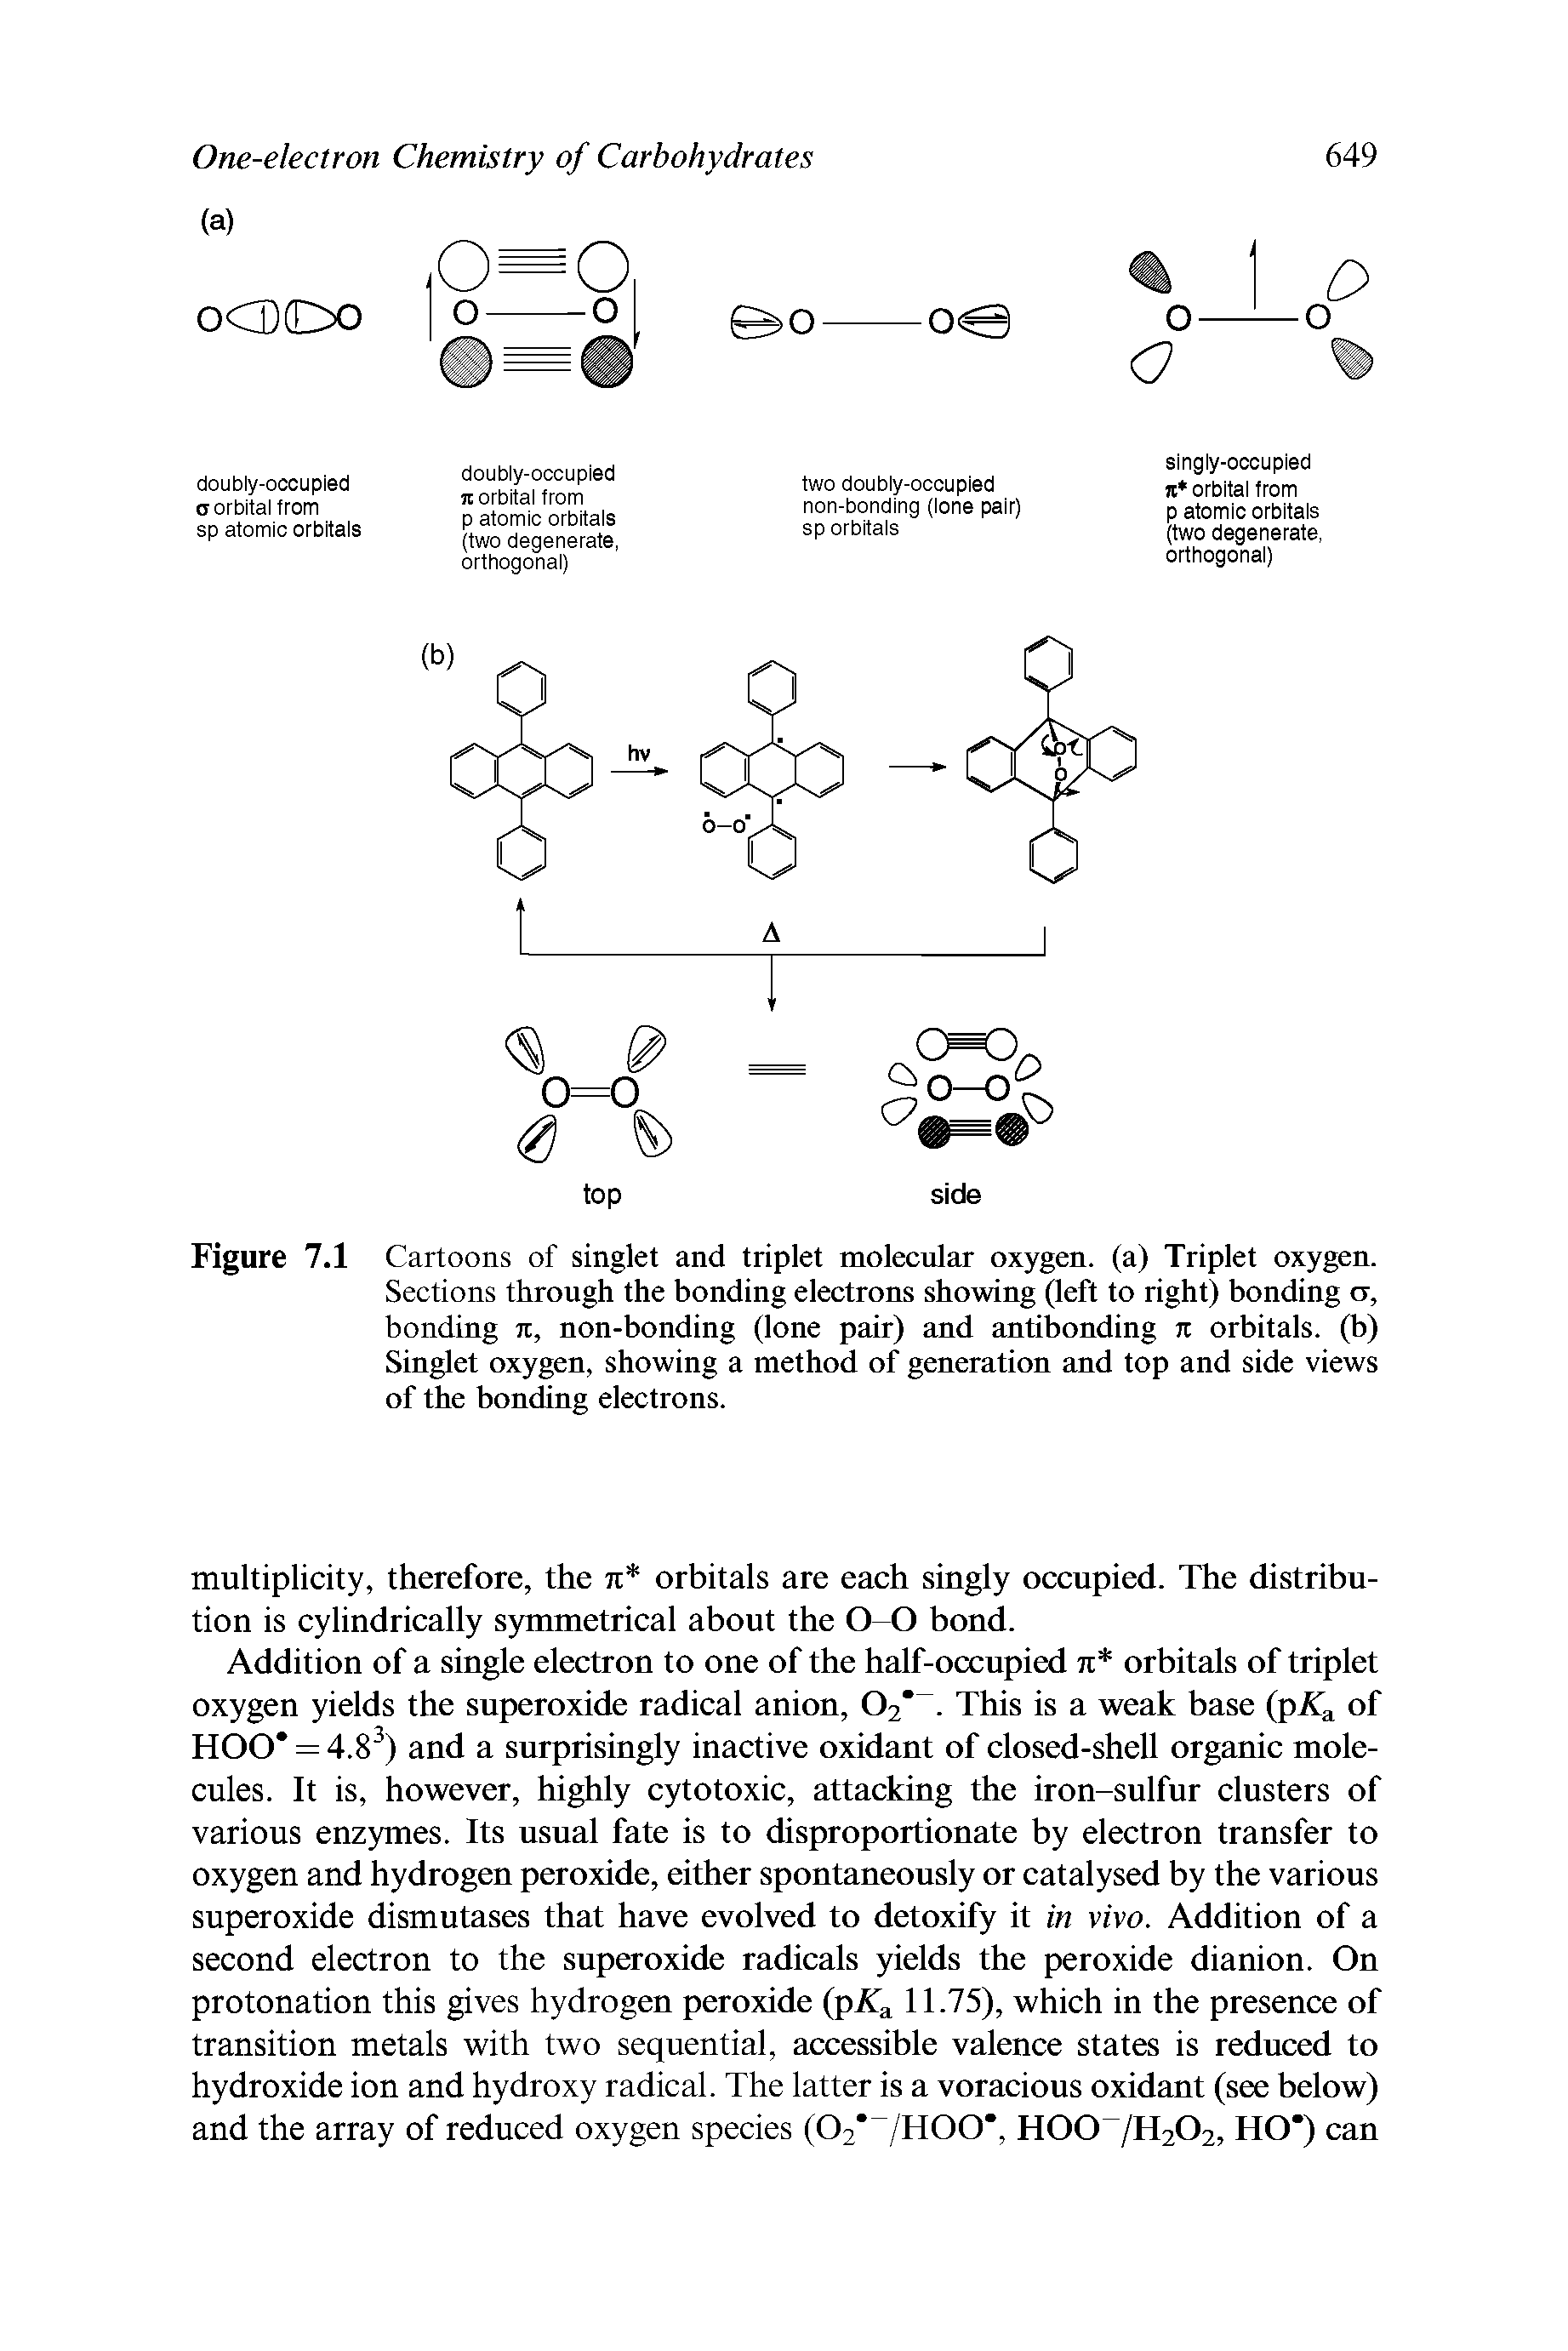 Figure 7.1 Cartoons of singlet and triplet molecular oxygen, (a) Triplet oxygen.